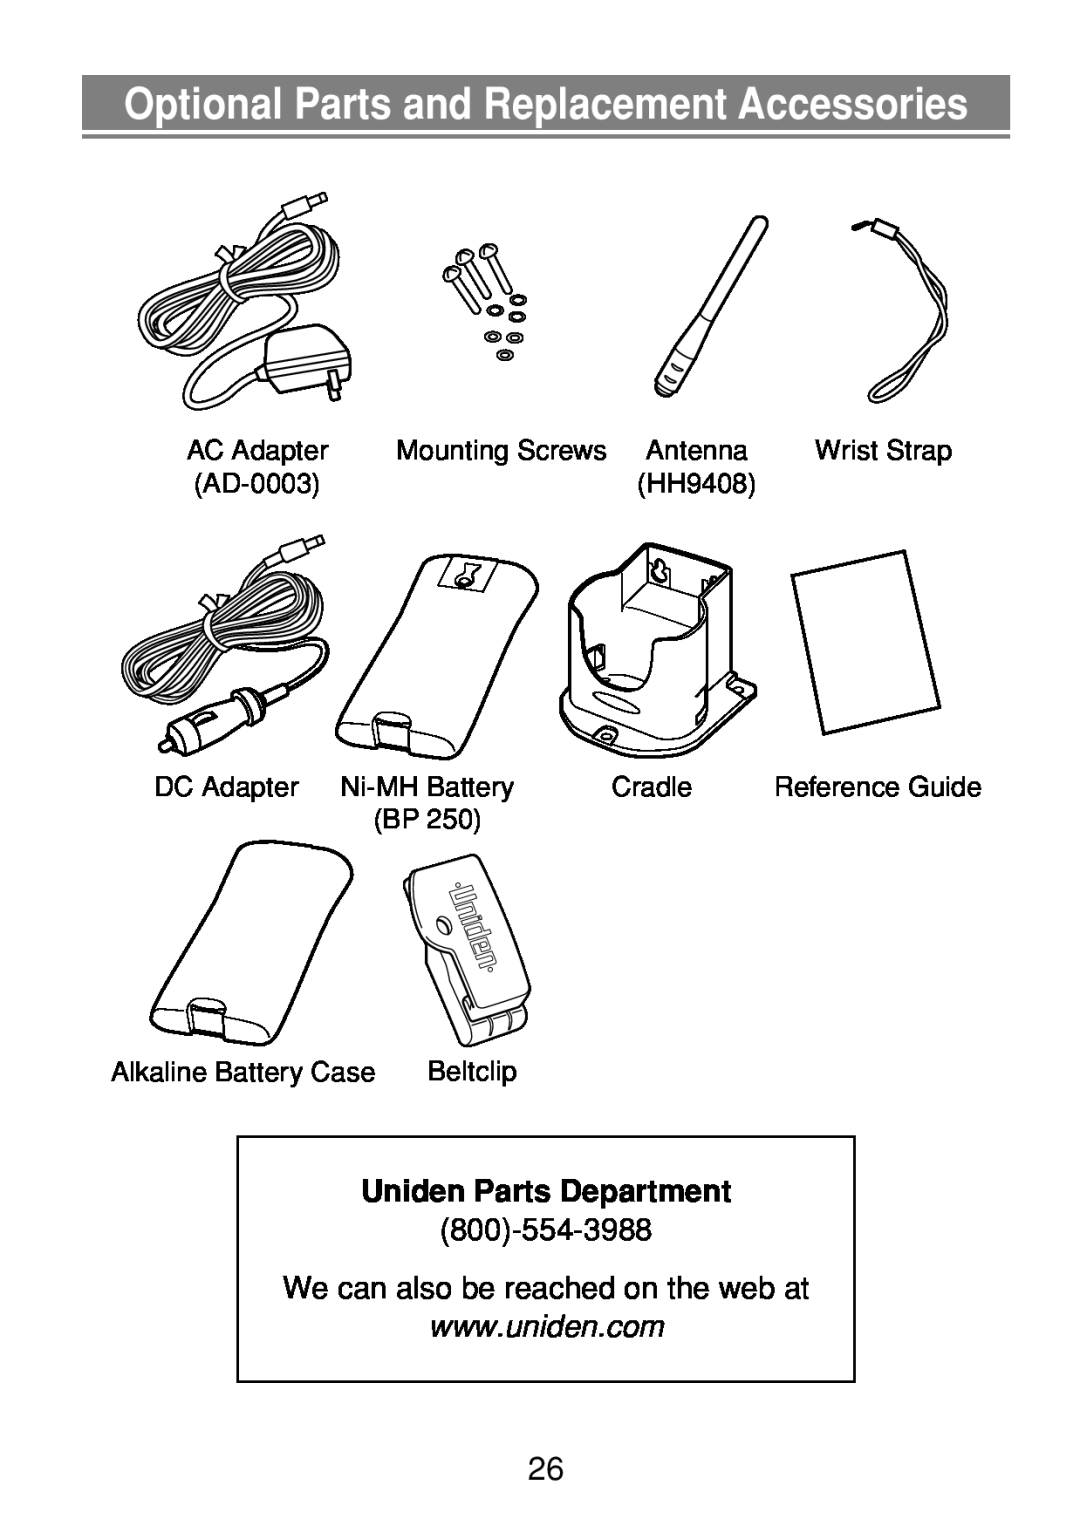 Uniden 250 manual Optional Parts and Replacement Accessories, Uniden Parts Department 